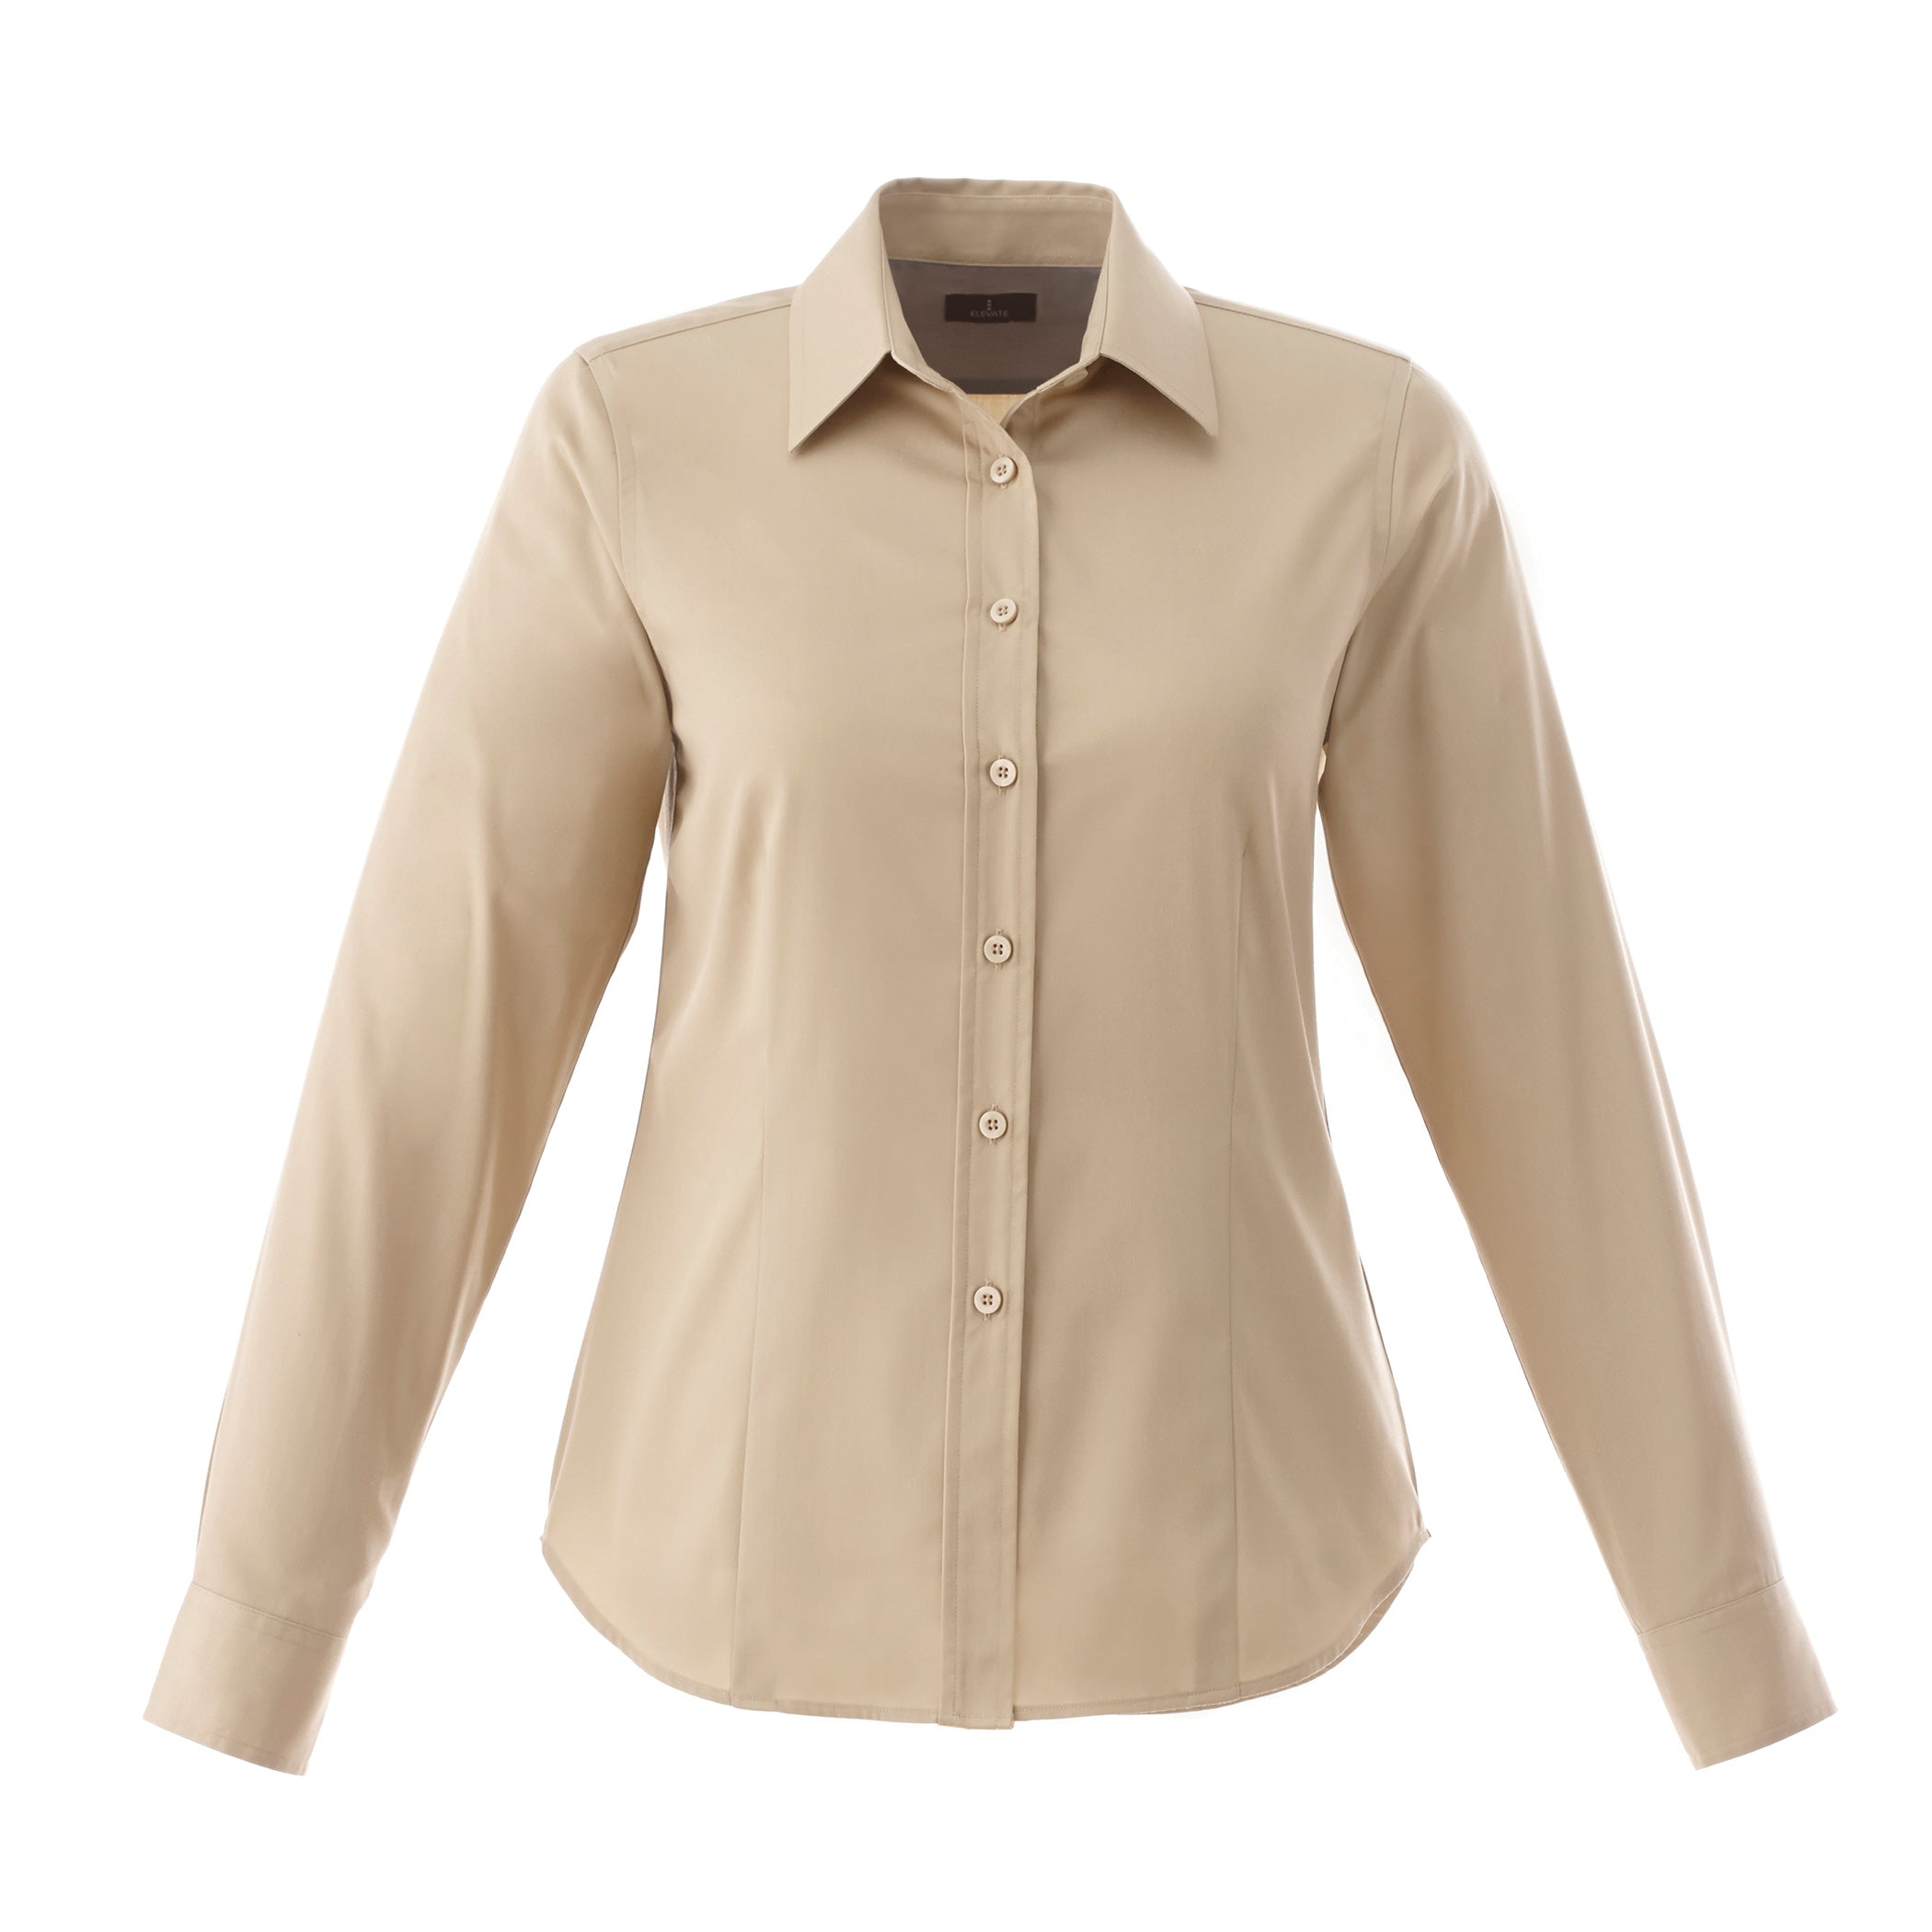 LANDMAR® Wilshire Women's Long Sleeve Shirt